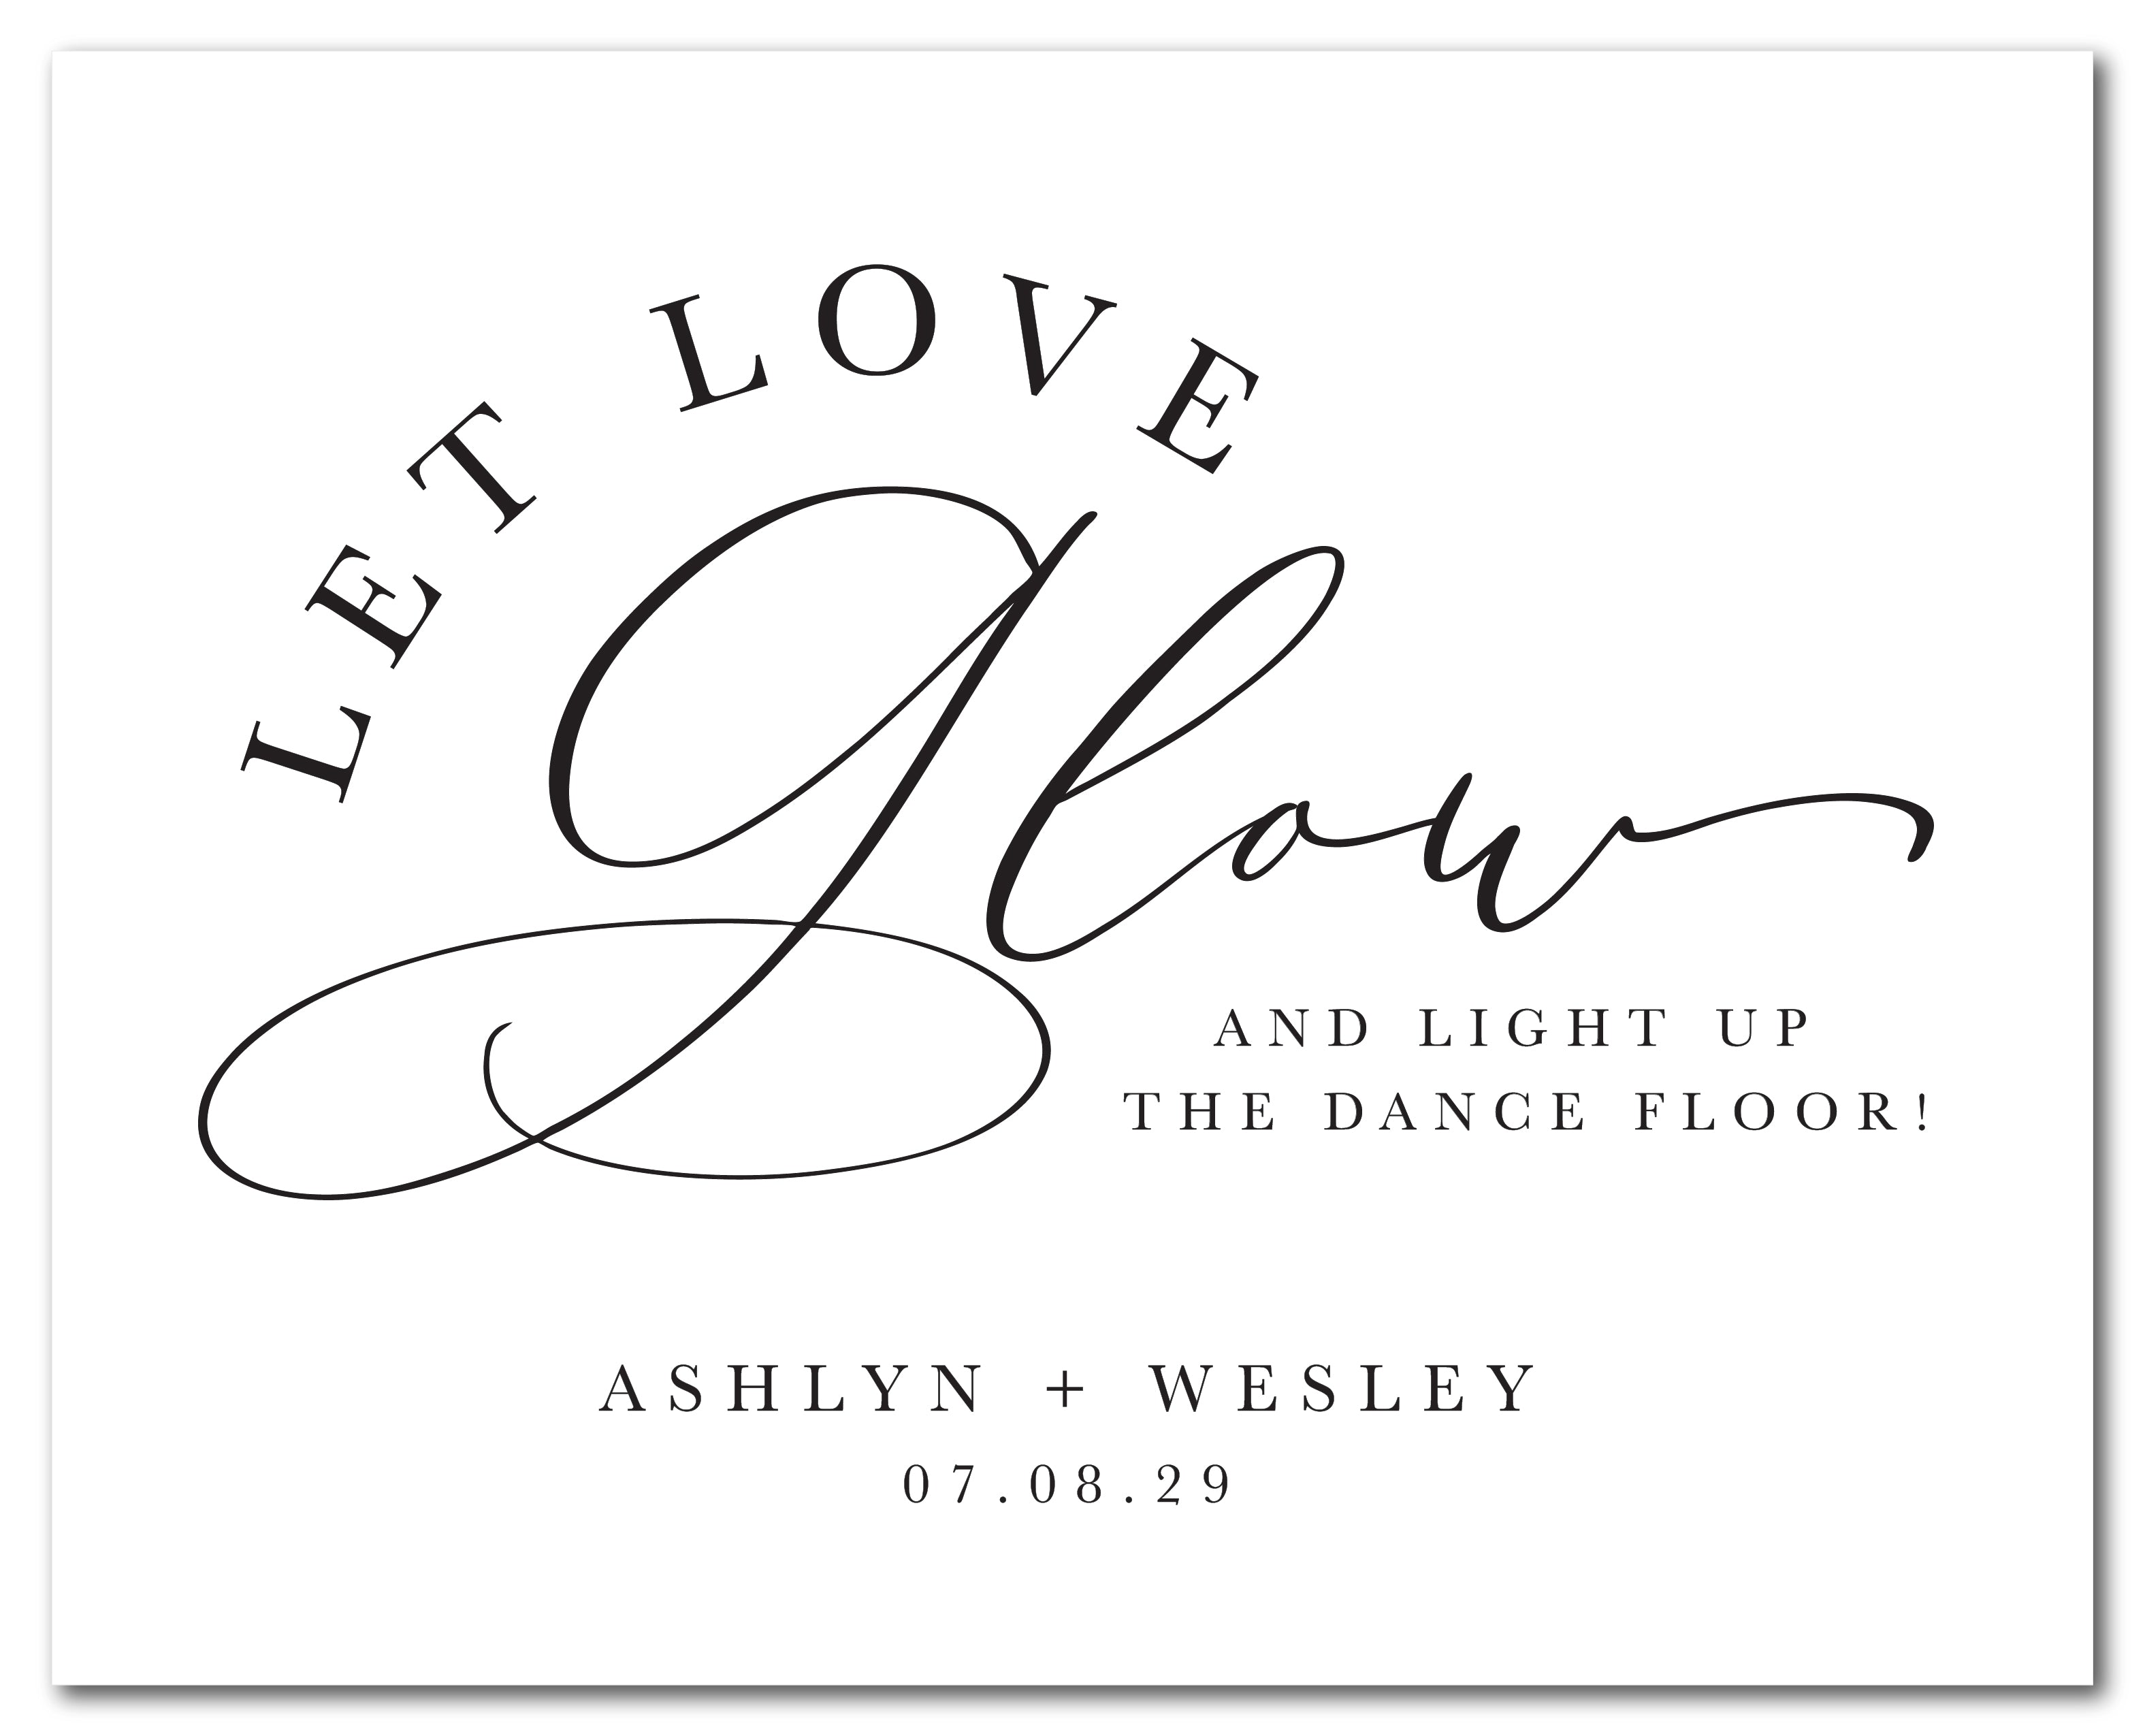 Let Love Glow Light up the Dance Floor . Wedding Glow Sticks for